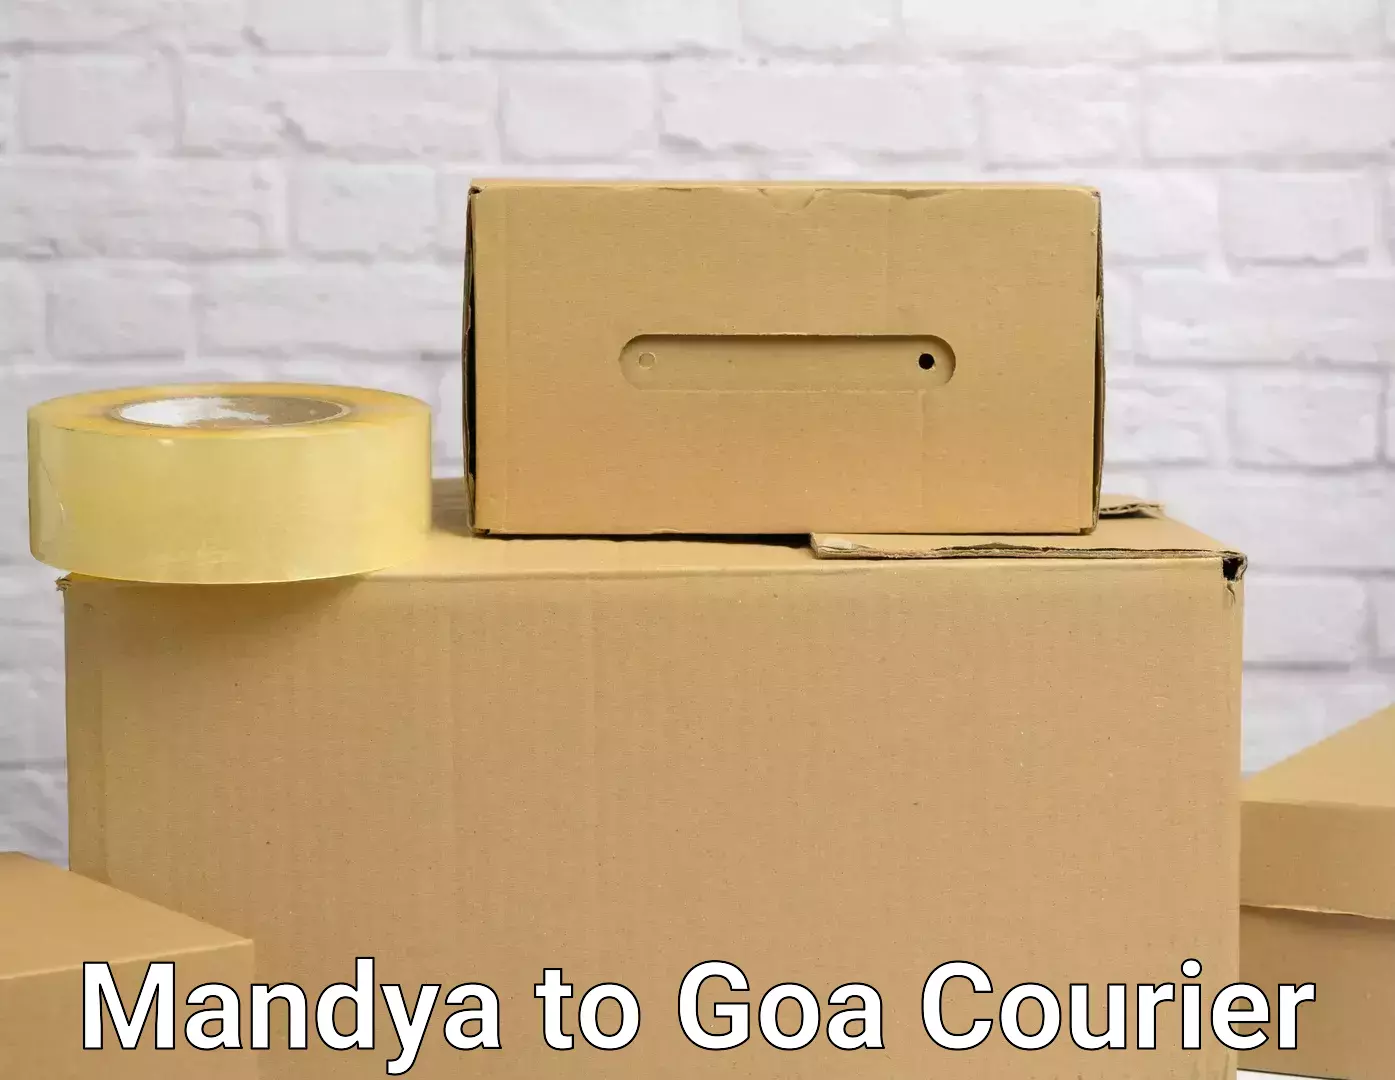 Efficient moving company Mandya to Goa